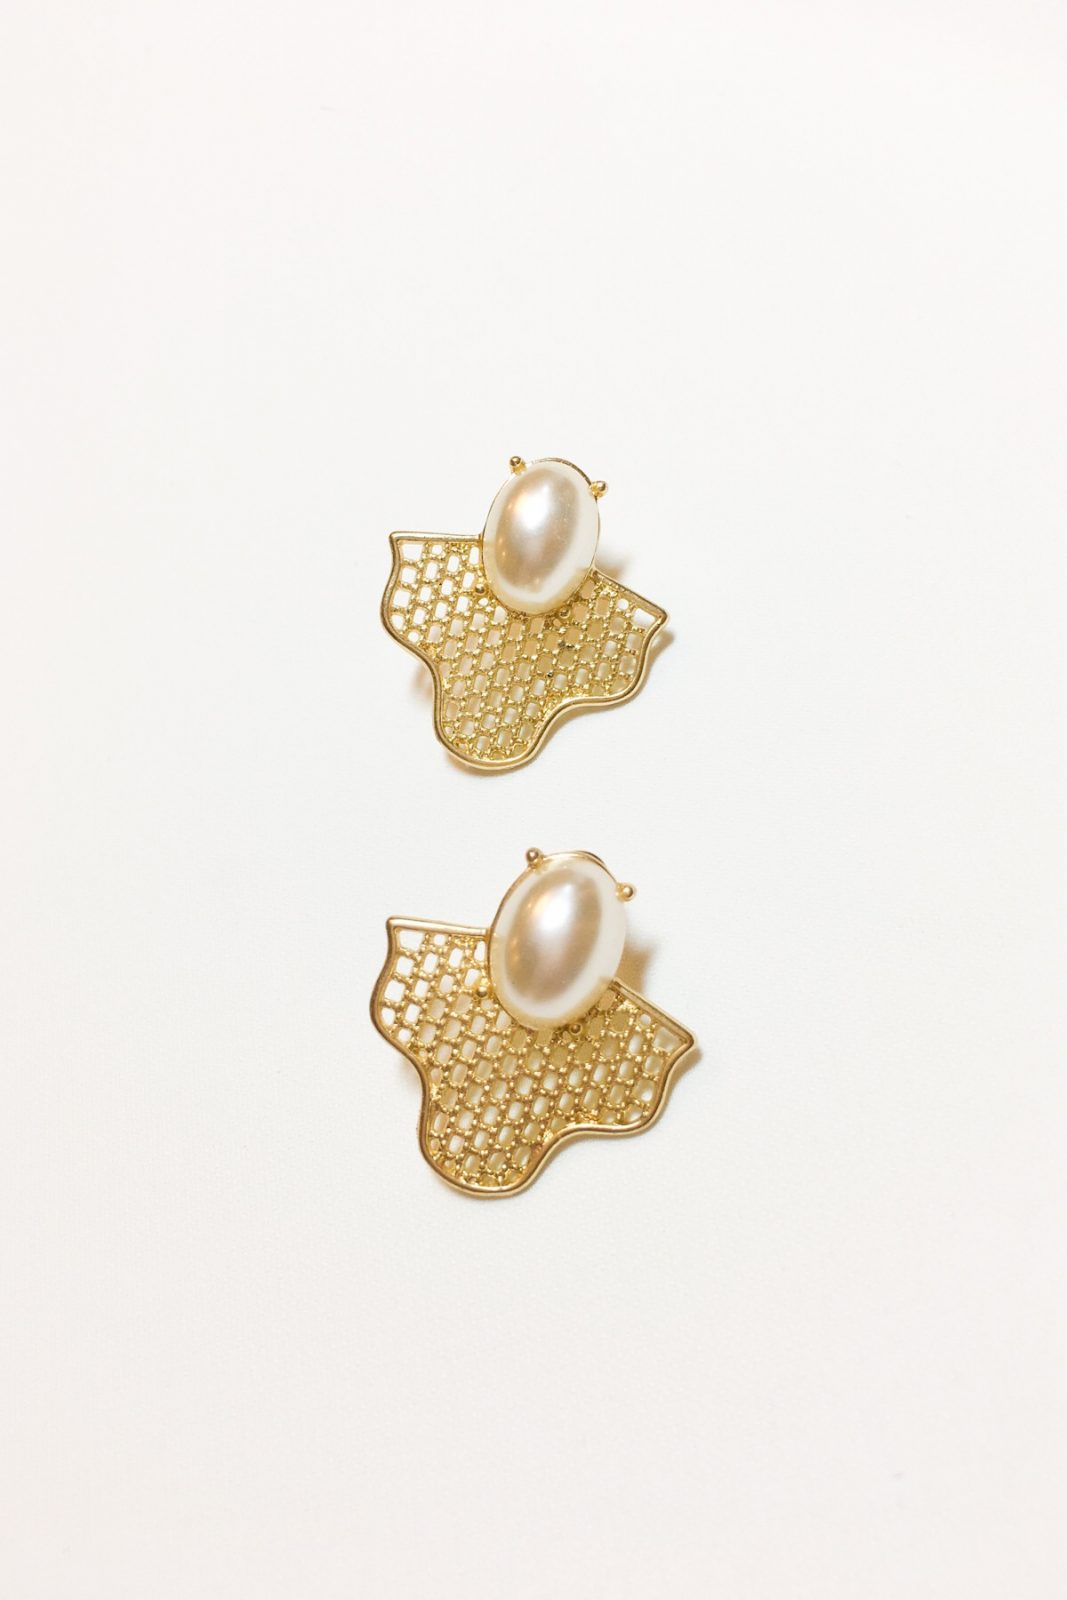 SKYE SF modern minimalist women fashion accessories Daria 18K Freshwater Pearl earrings 2